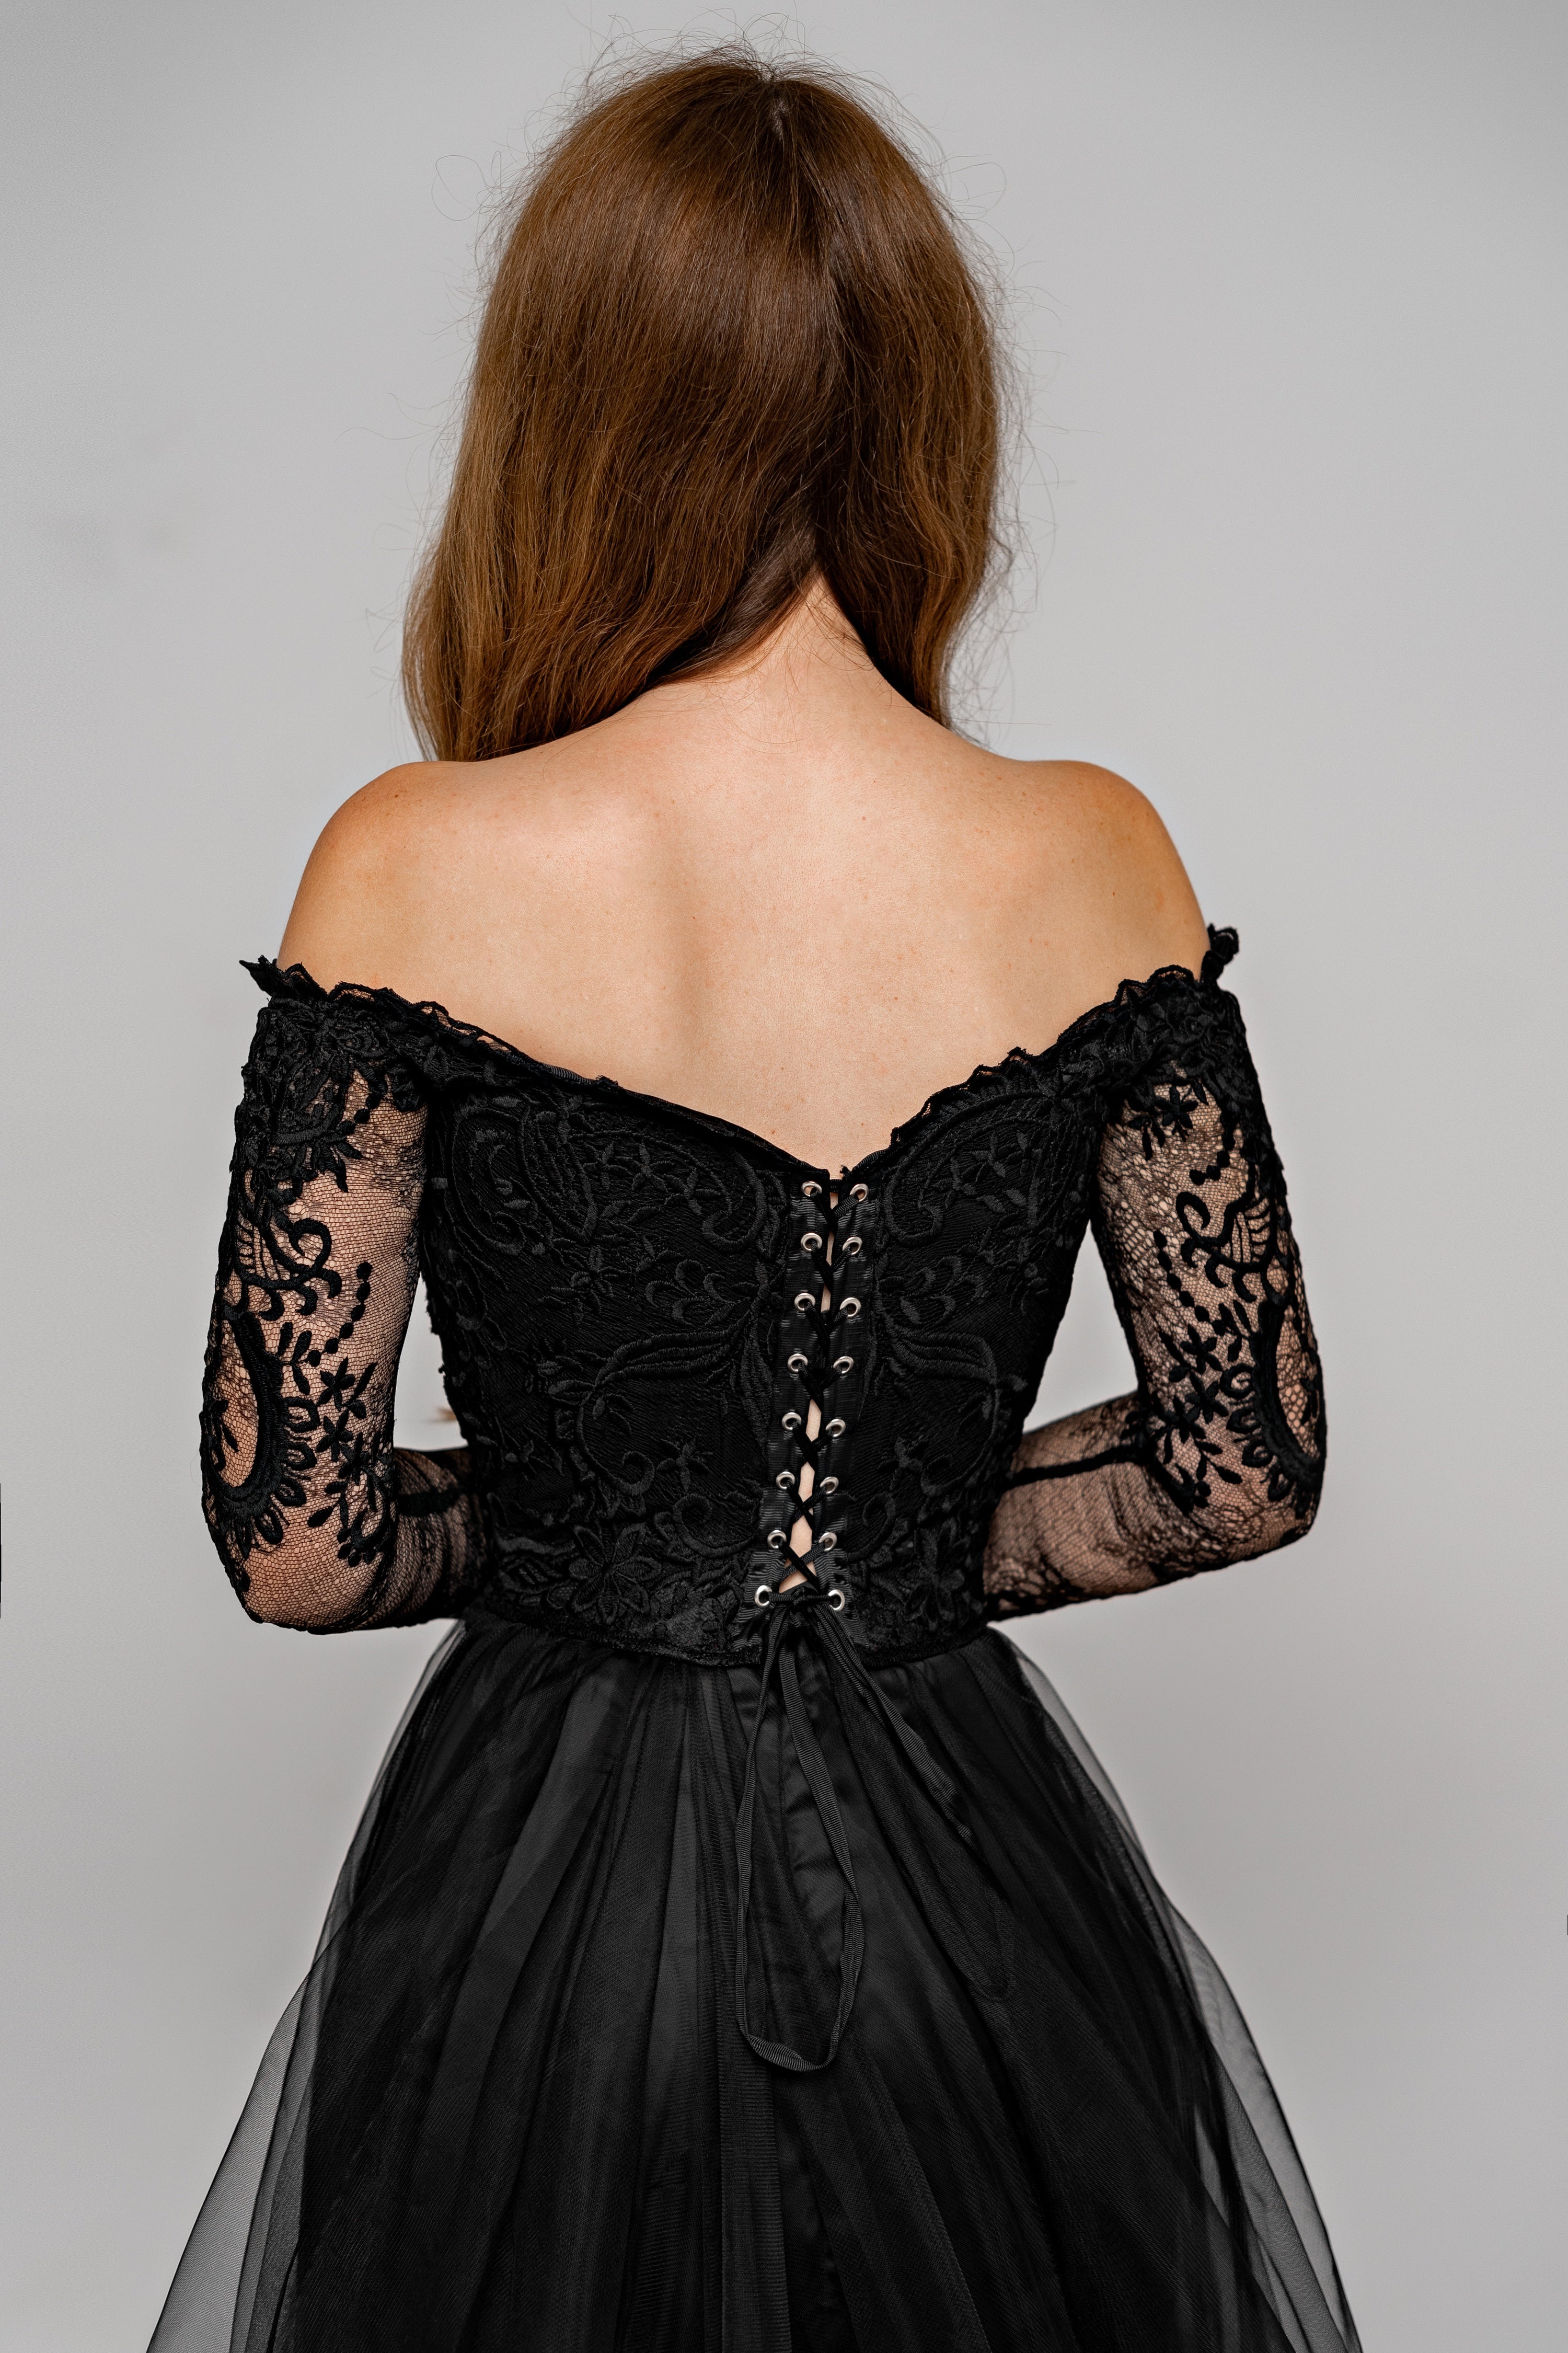 black wedding corset with grommets